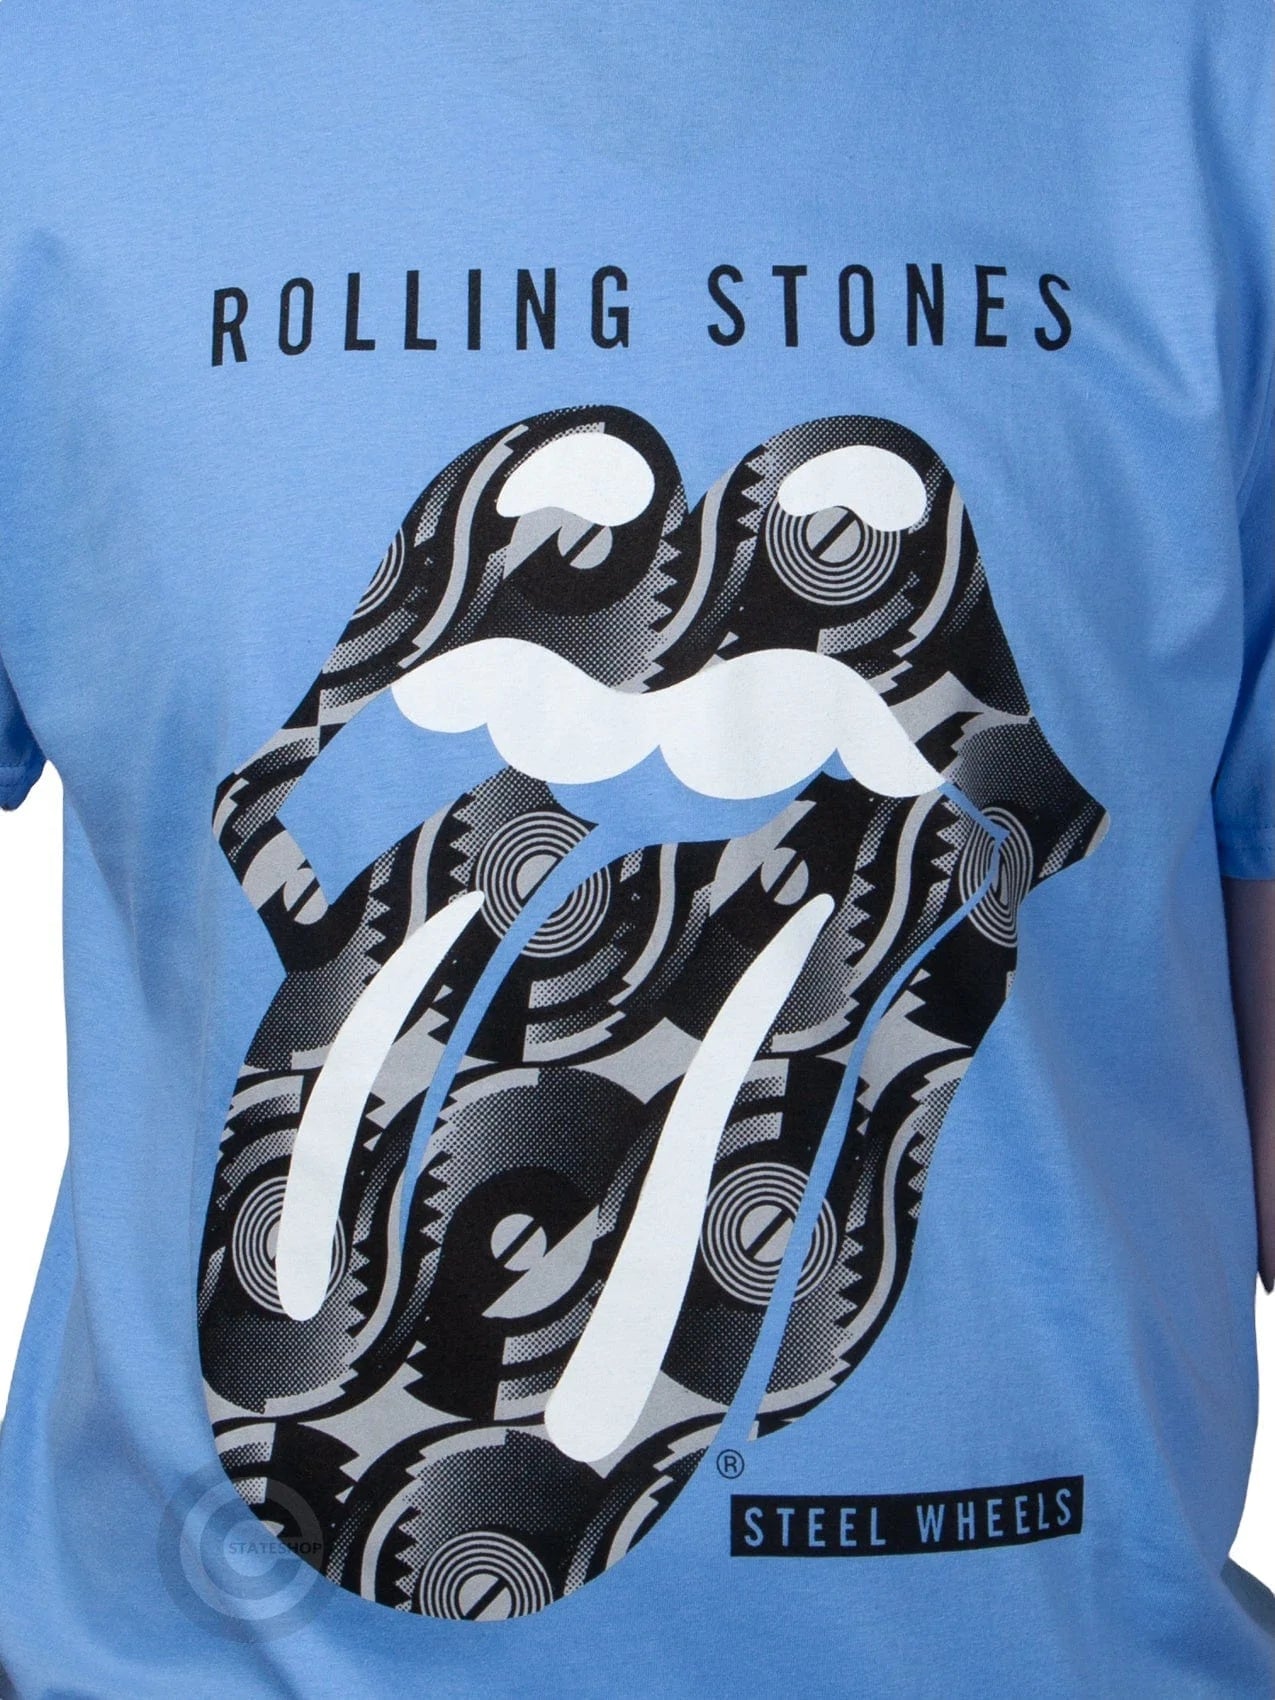 RockstarzT-shirt The Rolling Stones "Steel Wheels" Blue